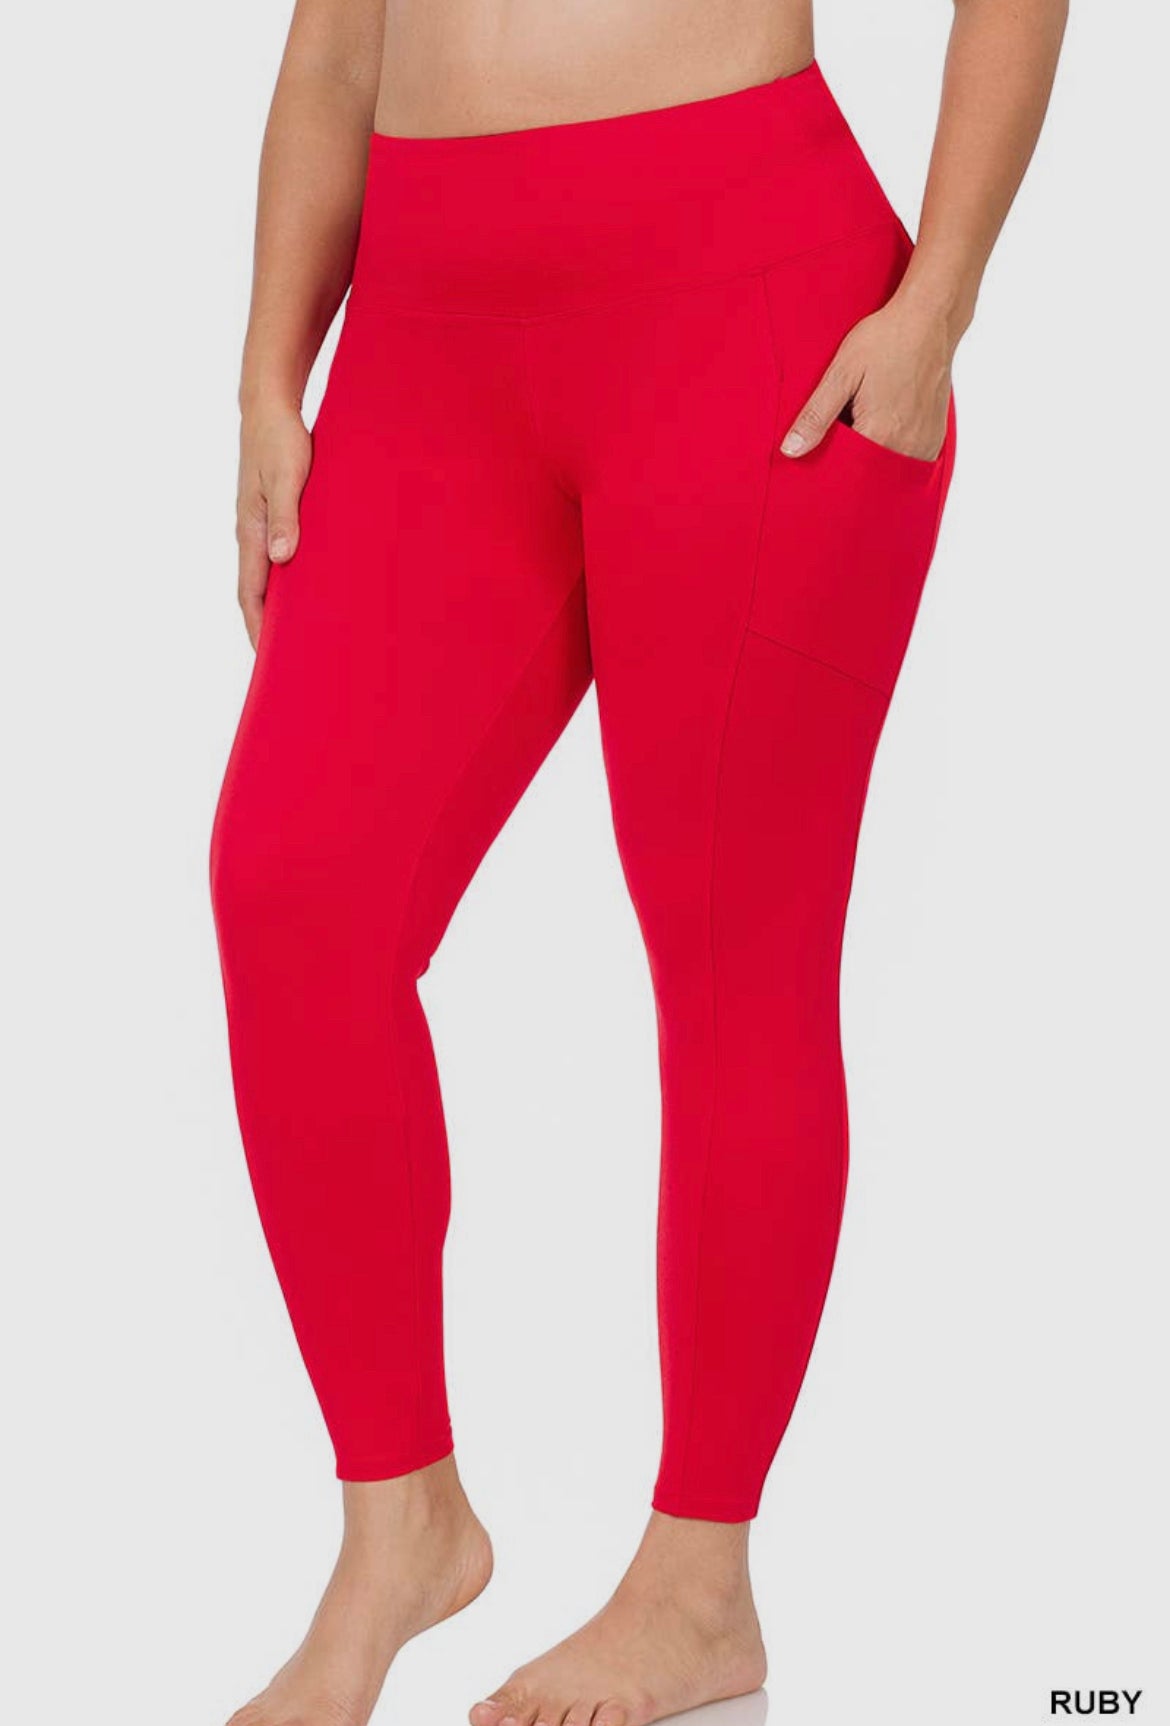 Red Prancing Llama Leggings Pants TC Tall & Curvy Size Dren Designs